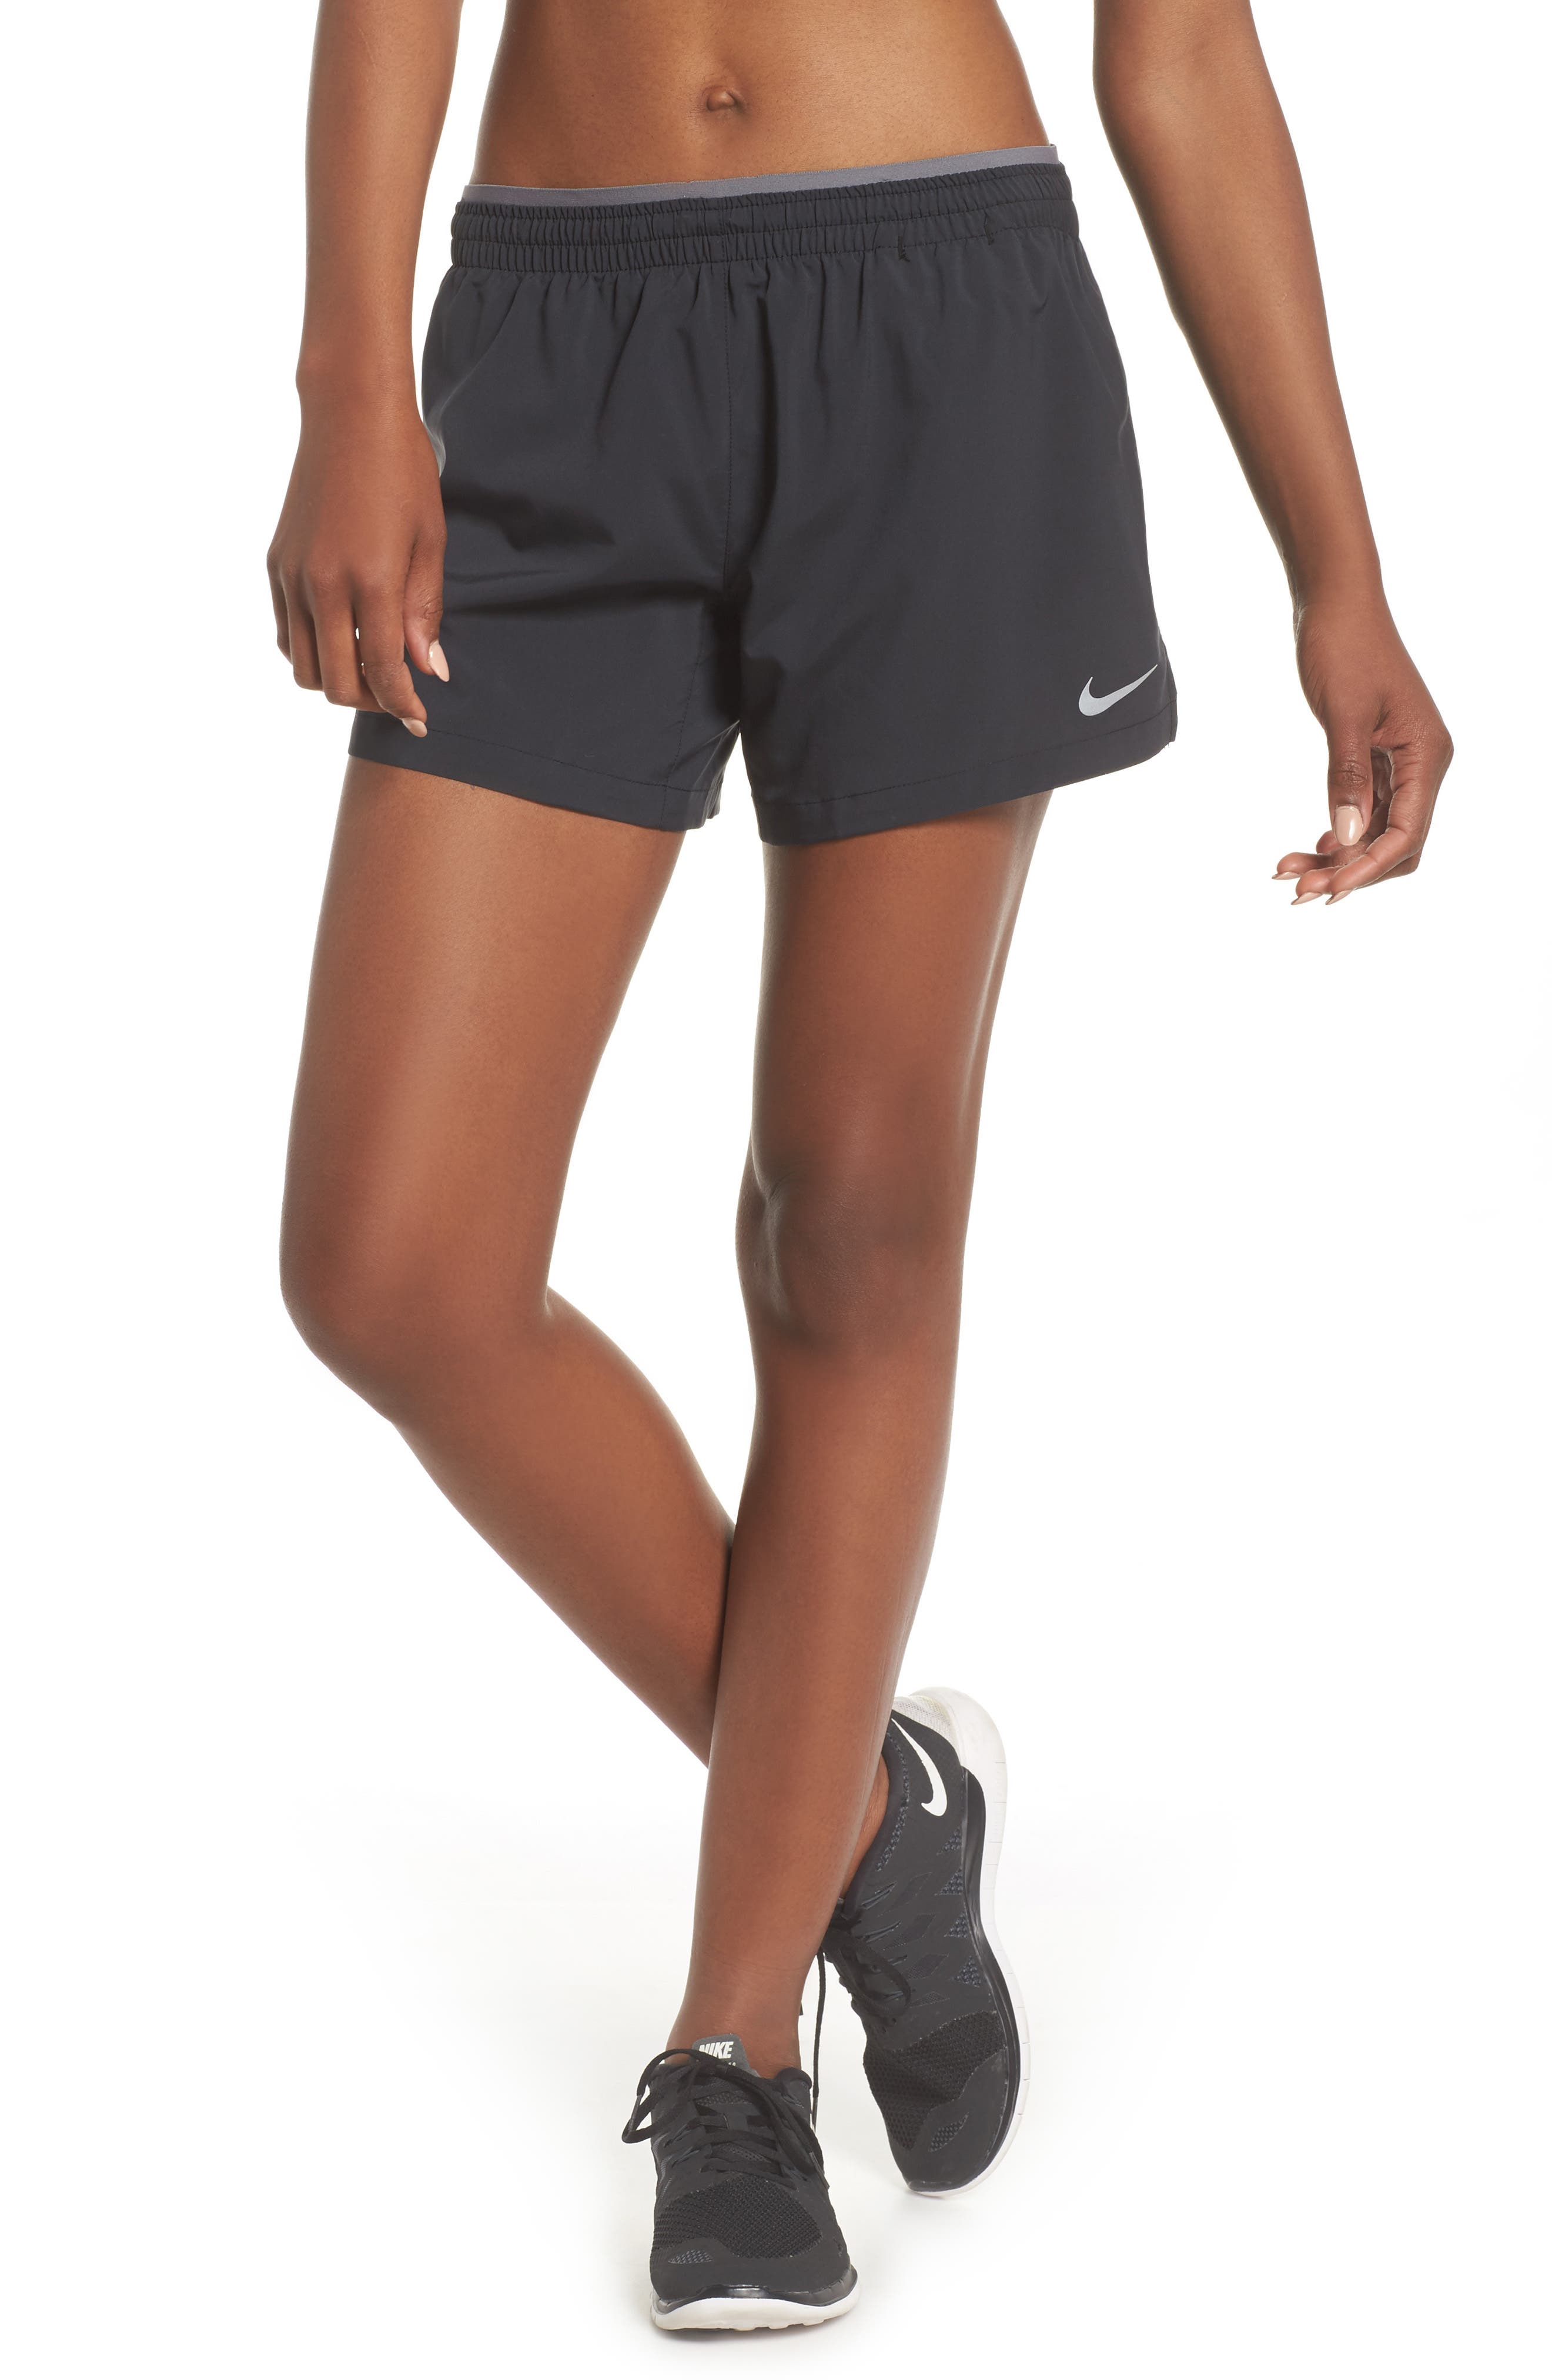 nike 7 inch running shorts women's